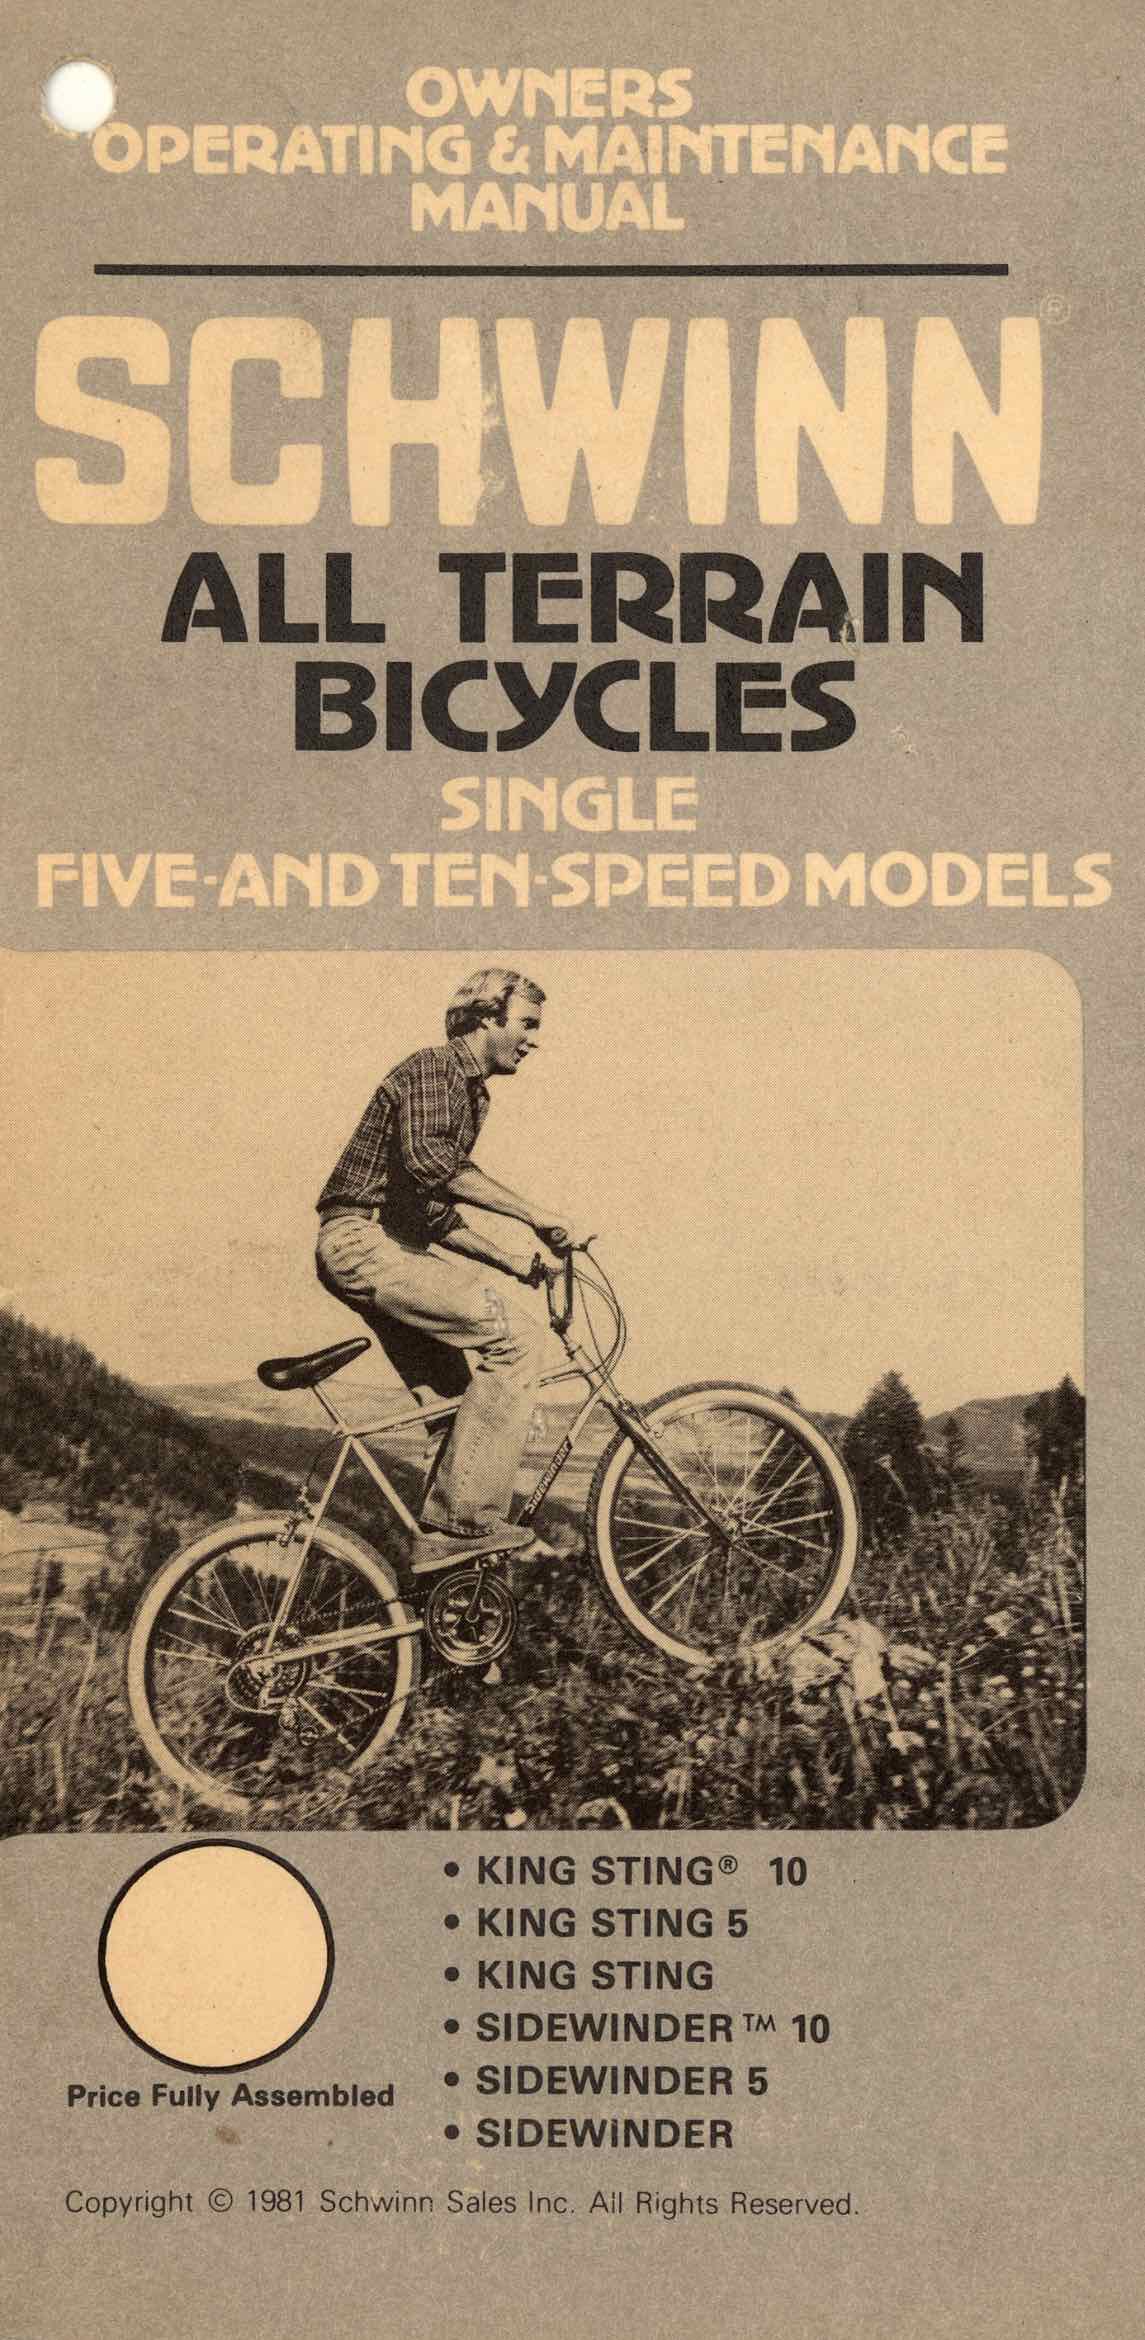 Schwinn All Terrain Bicycles - page 1 main image